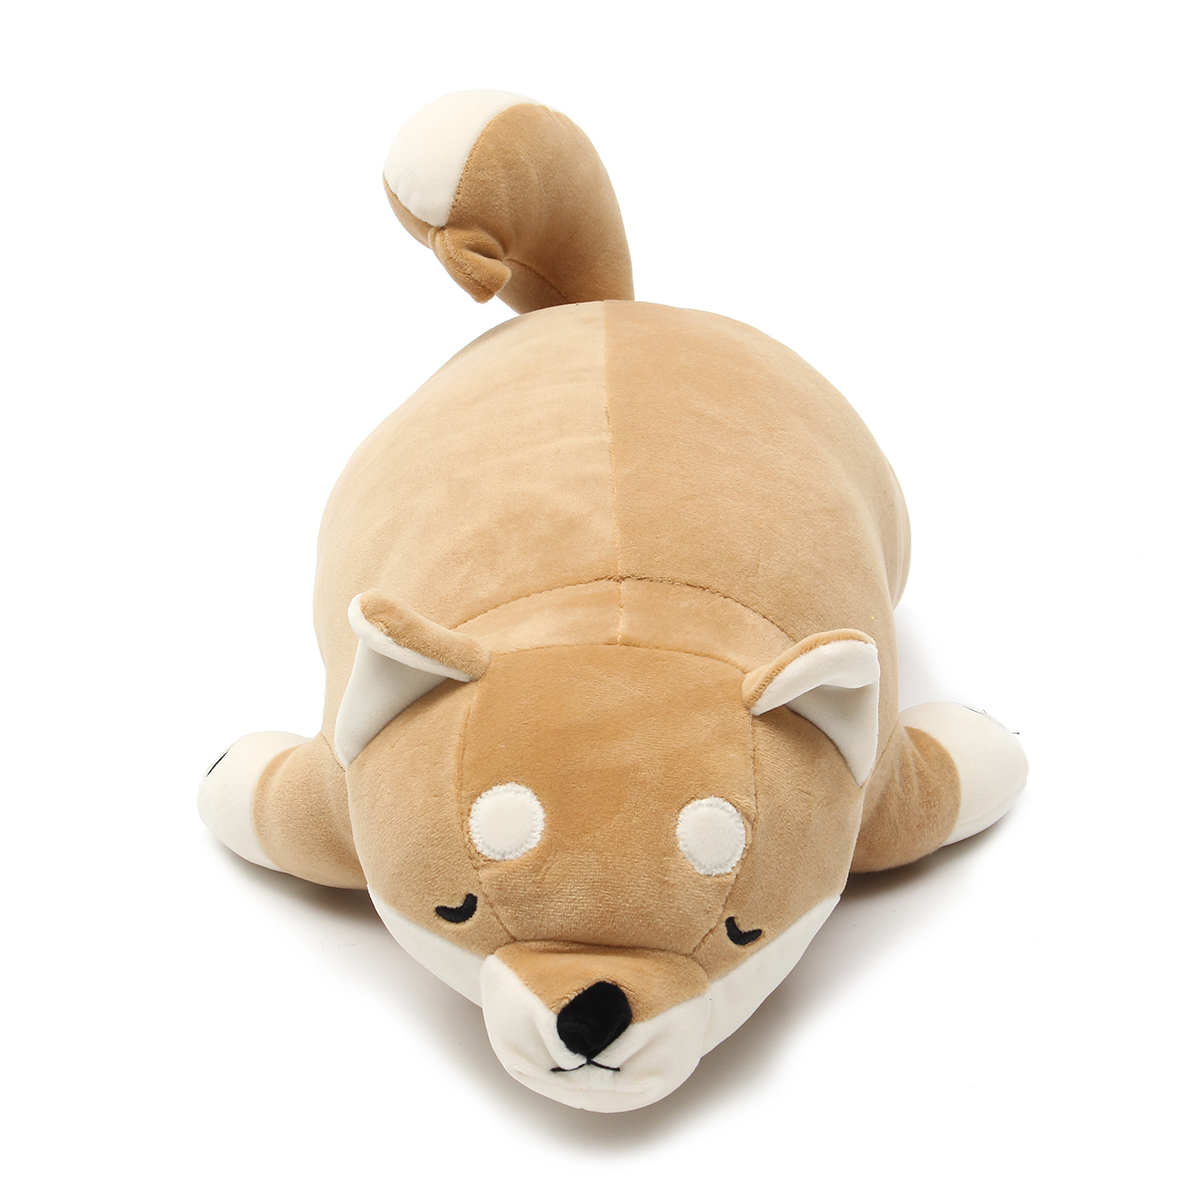 

50cm Japanese Anime Shiba Inu Dog Stuffed Plush Toy Doll Soft Stuffed Animal Toy Cute Gift